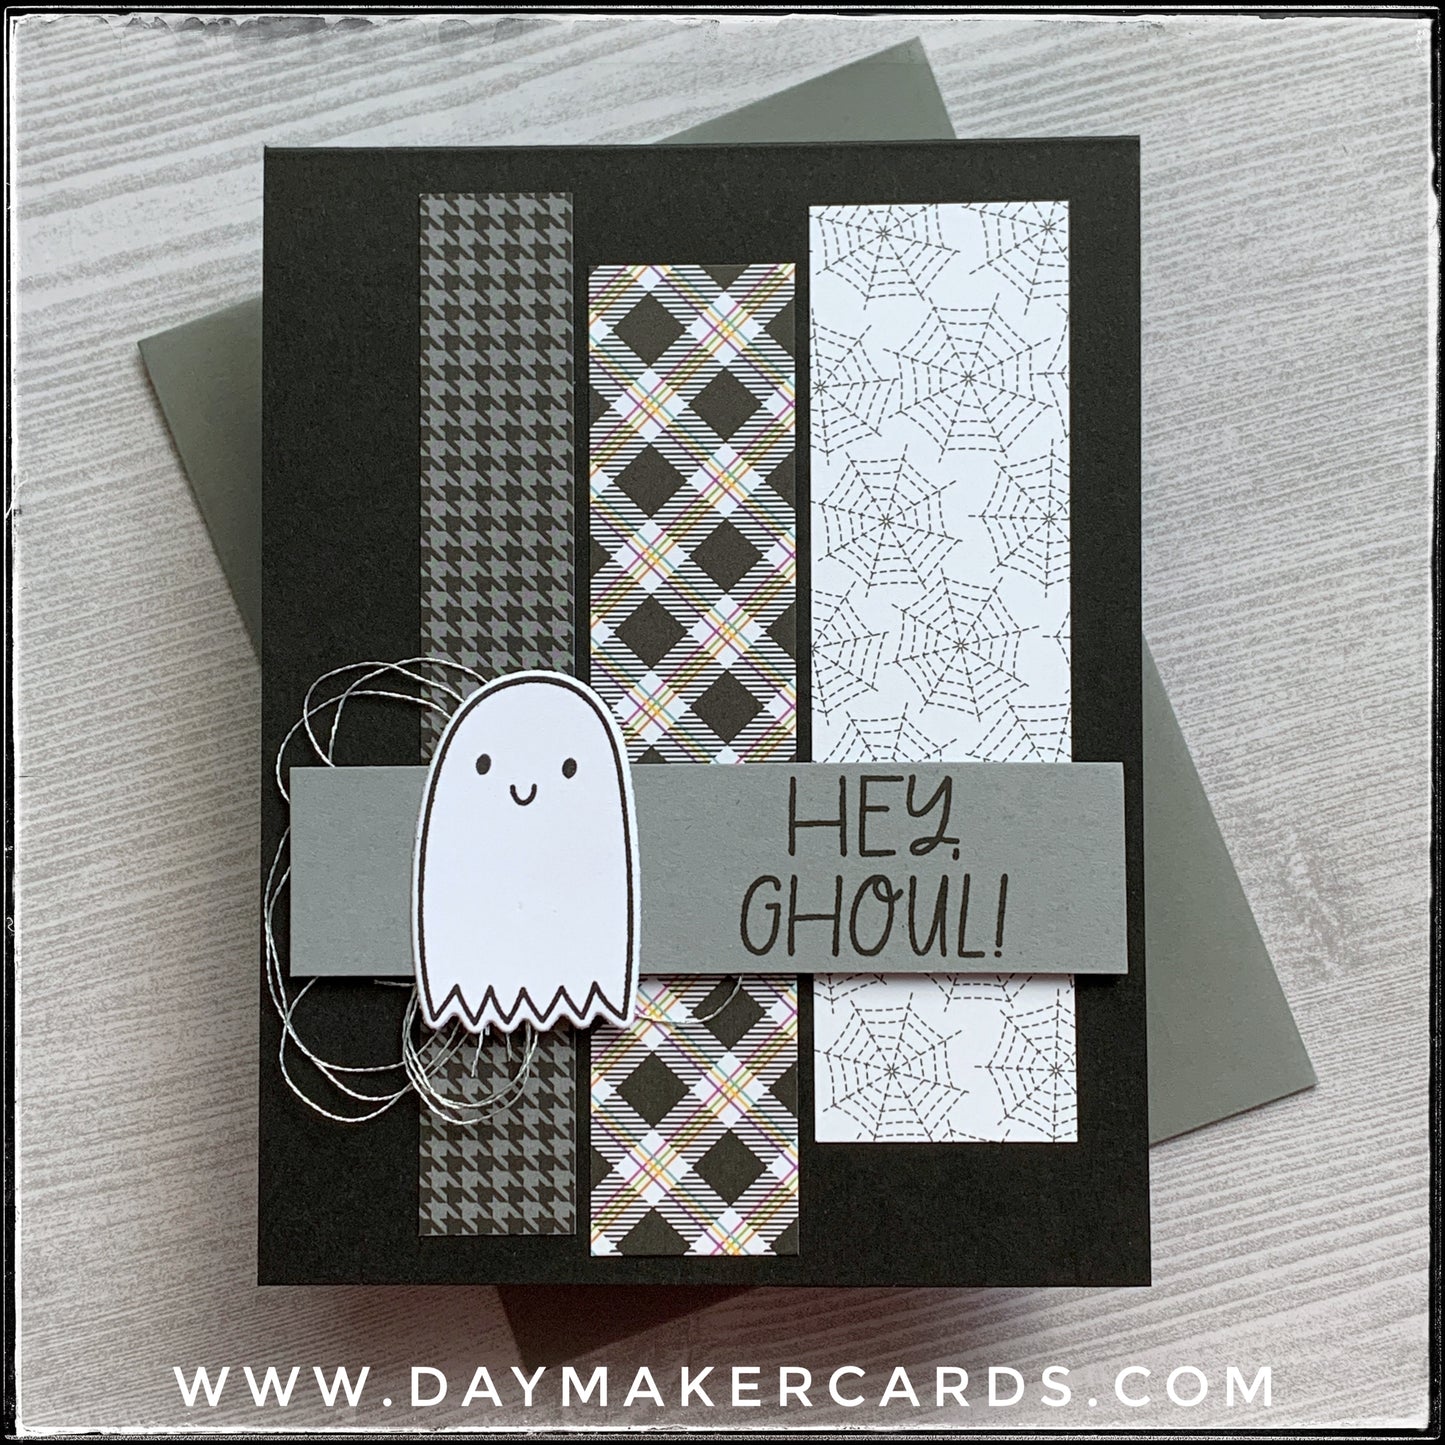 Hey Ghoul Handmade Card